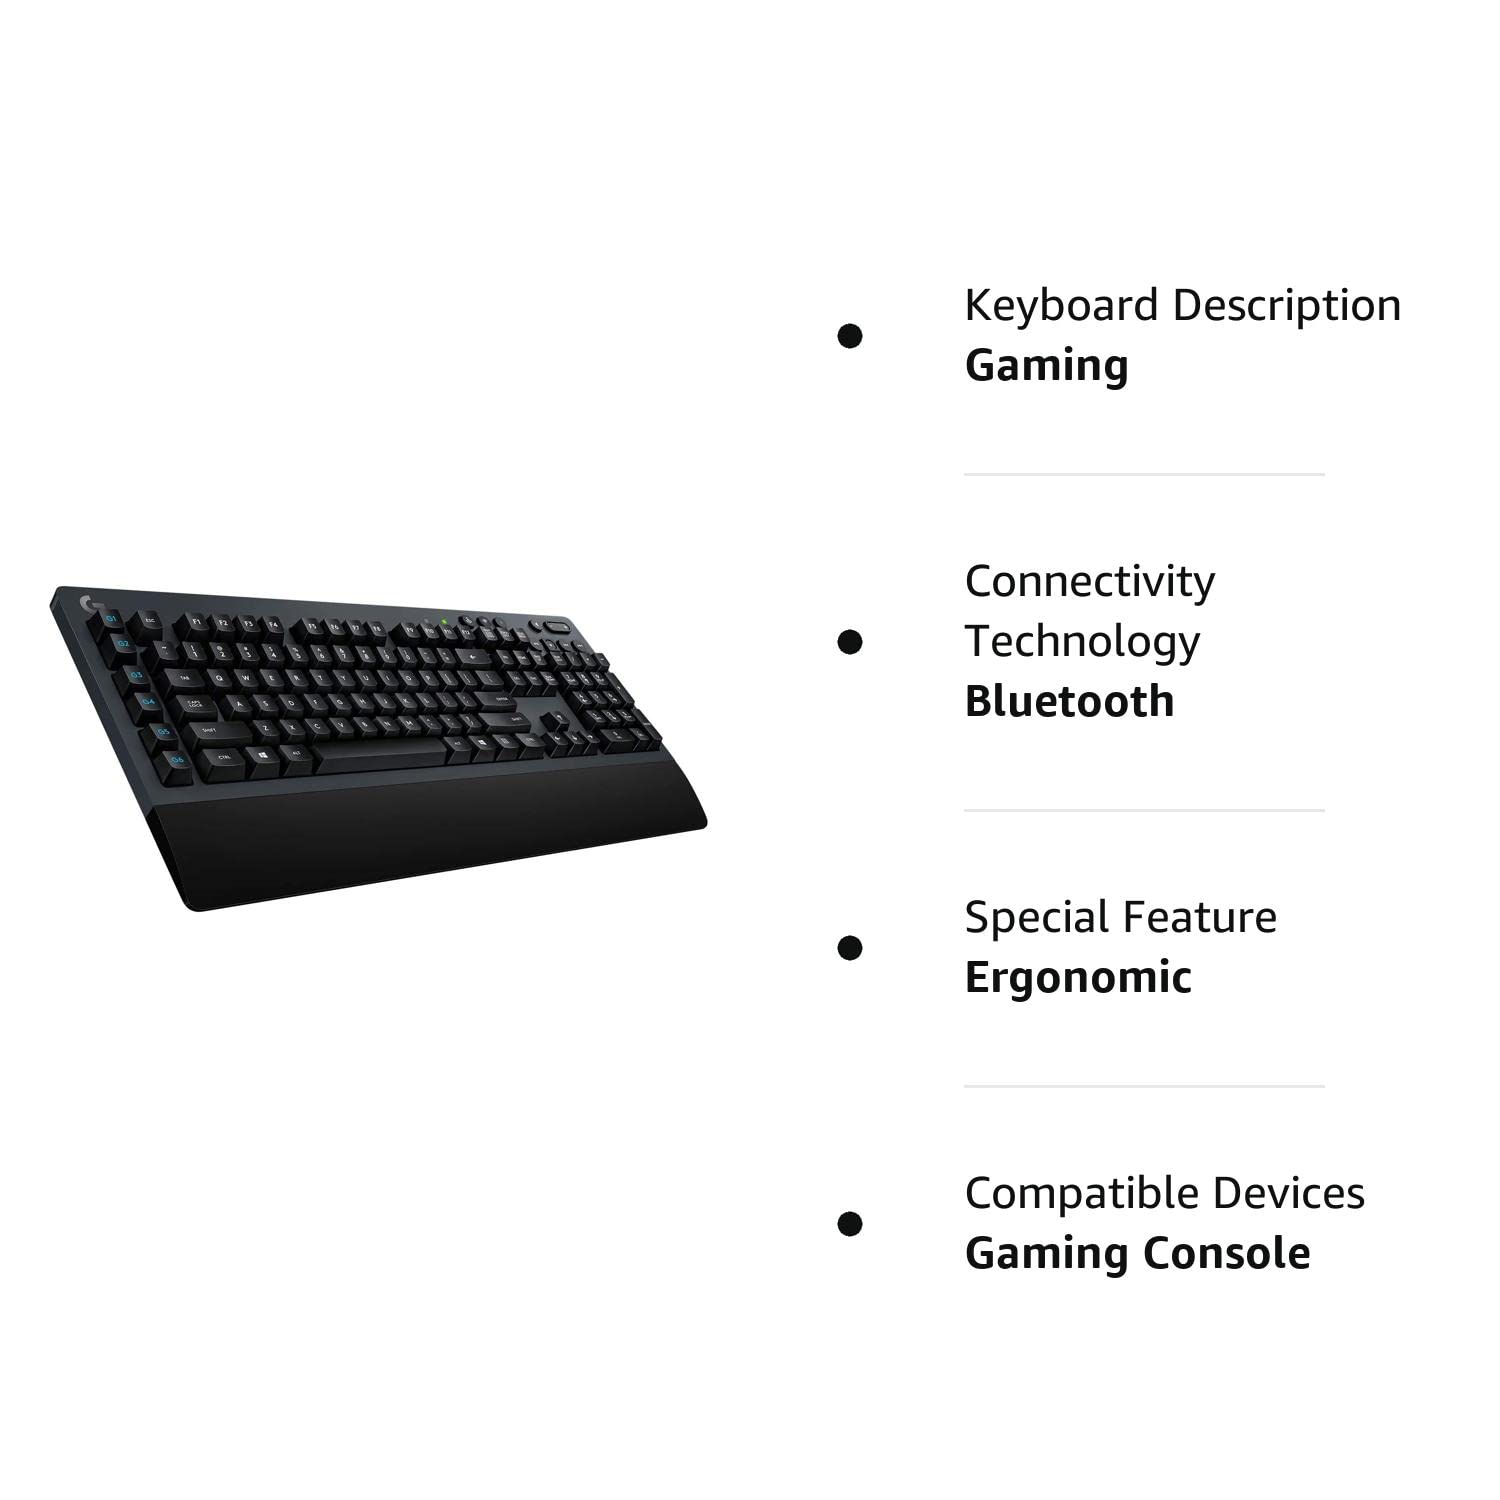 Logitech G613 LIGHTSPEED Wireless Mechanical Gaming Keyboard, Multihost 2.4 GHz + Bluetooth Connectivity (Renewed)